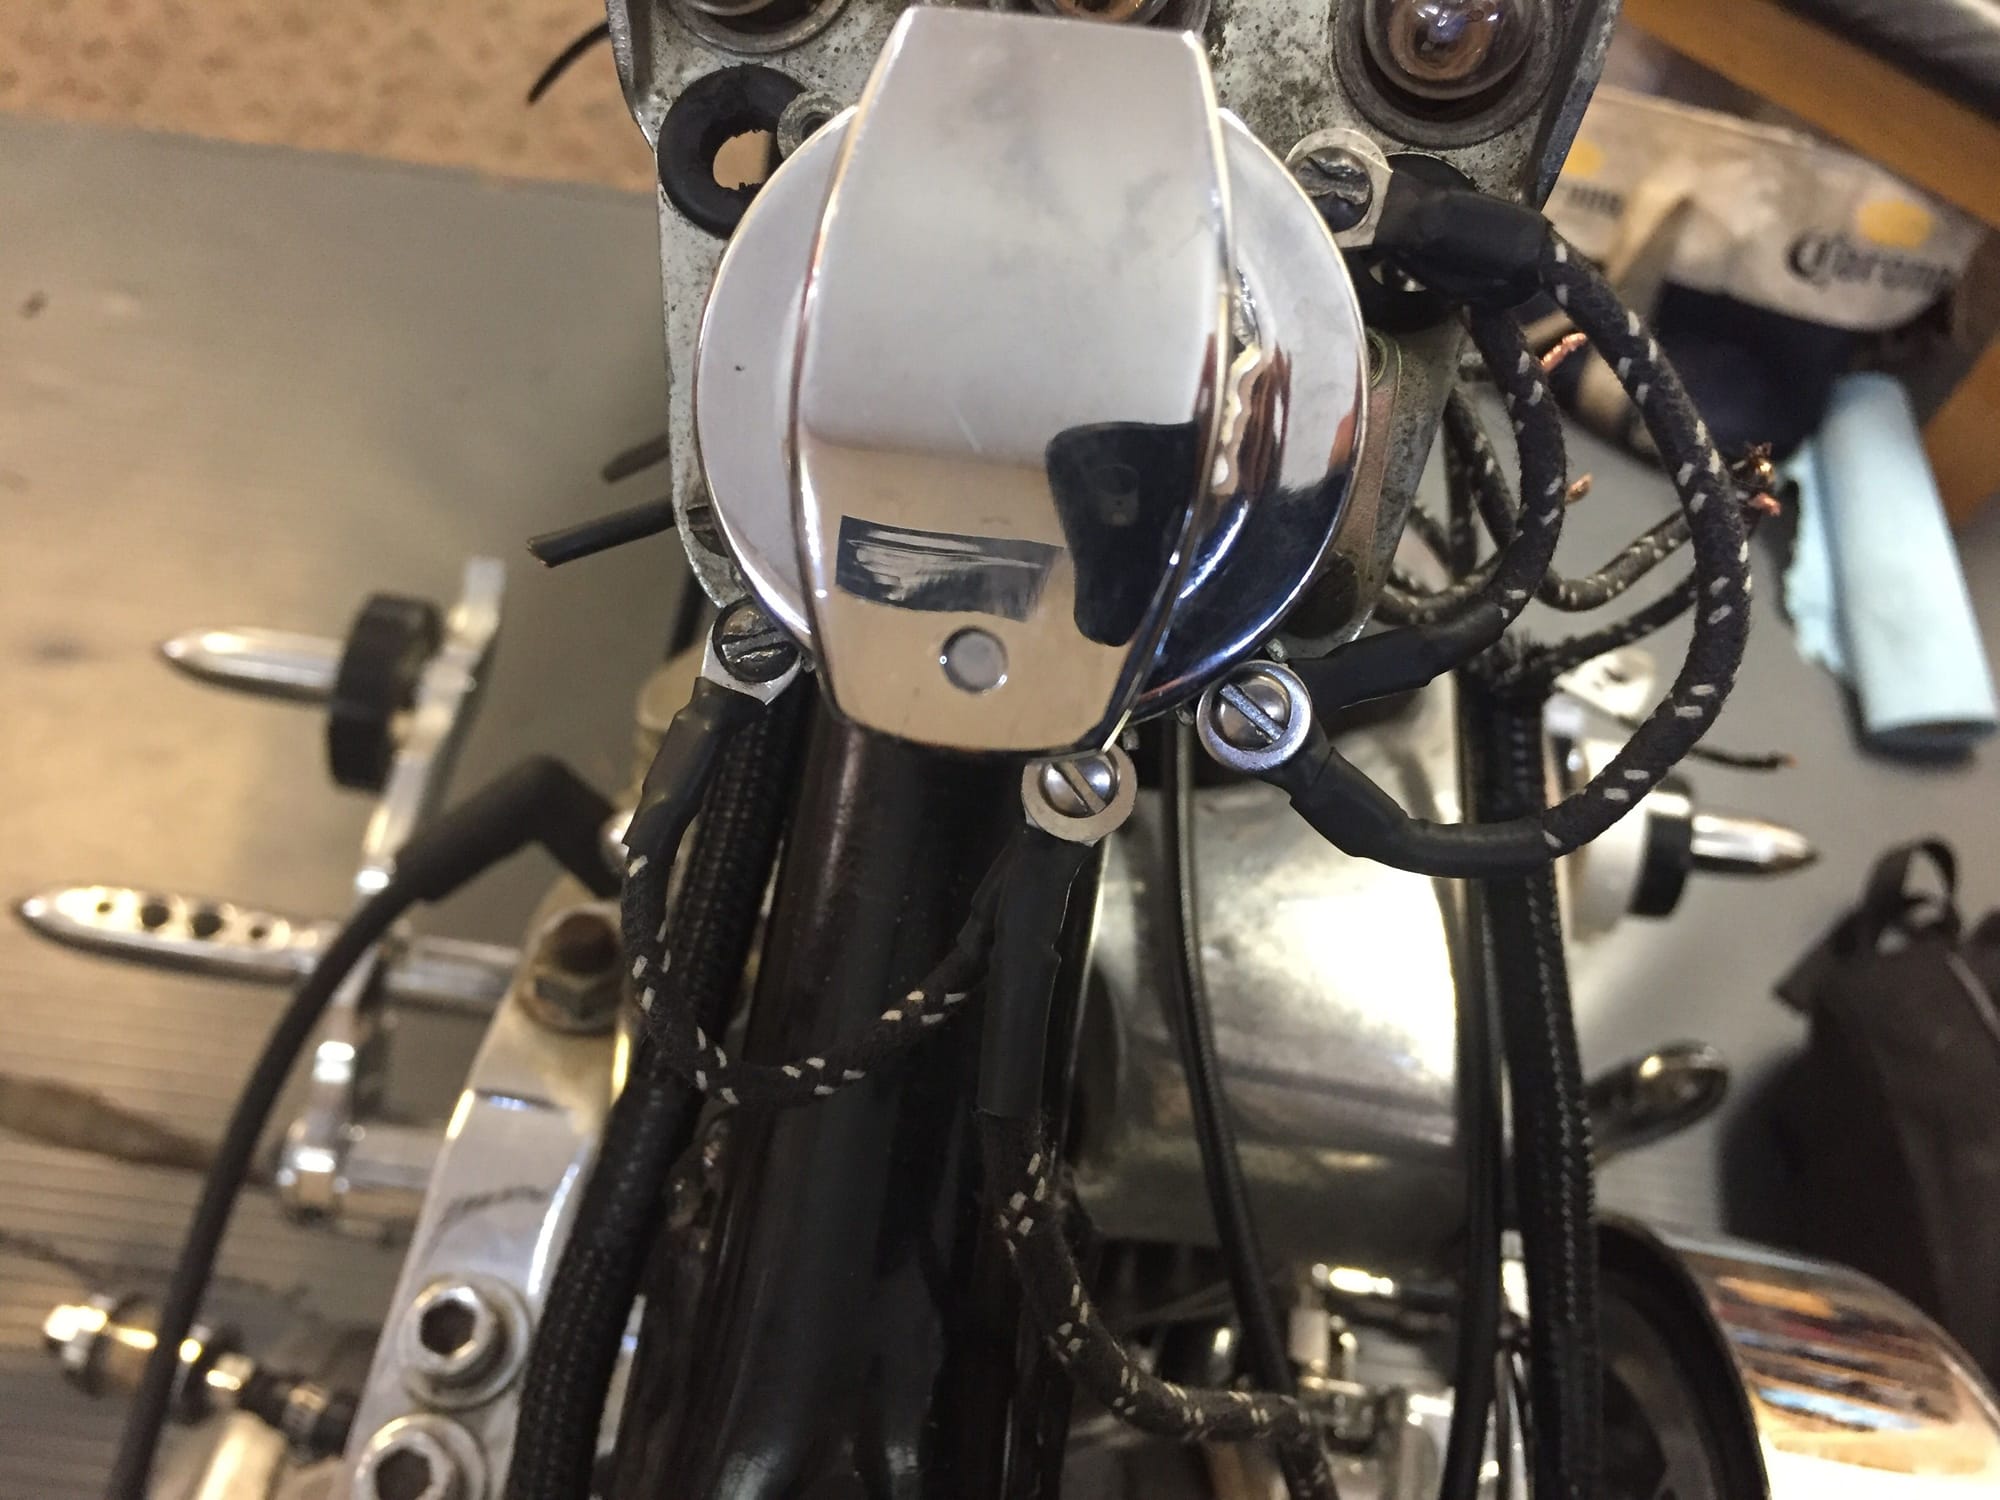 Wiring of 5 point ignition shovelhead - Harley Davidson Forums